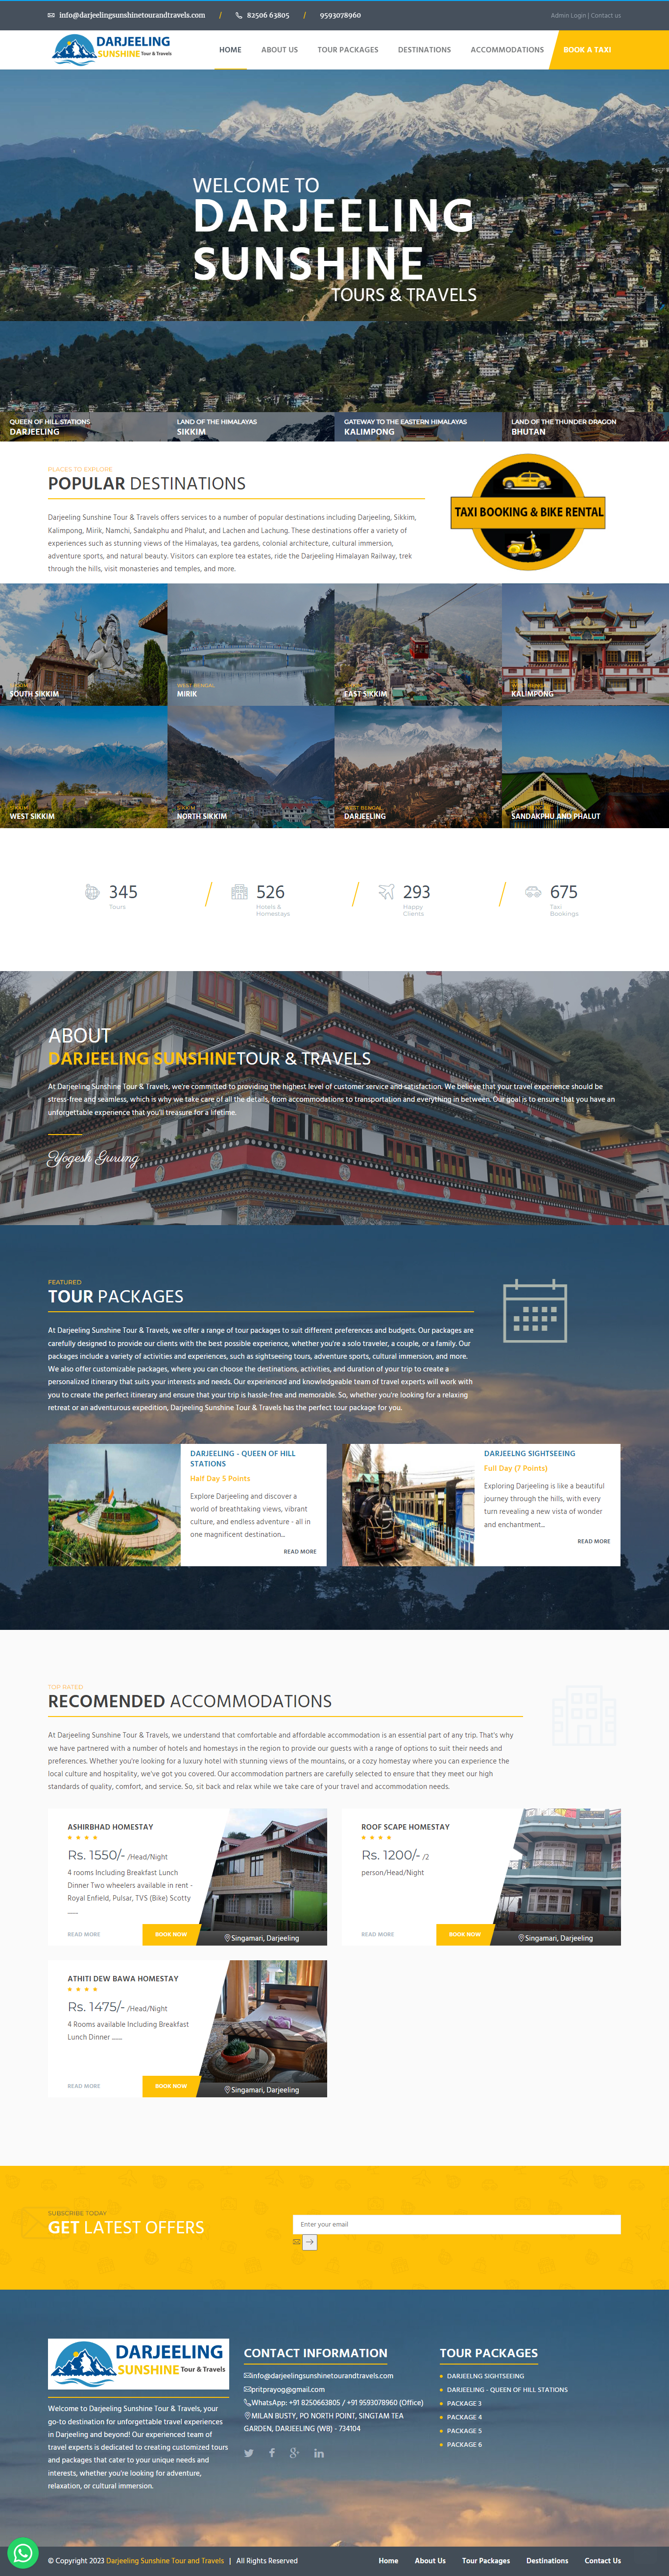 Darjeeling Sunshine Tour and Travels